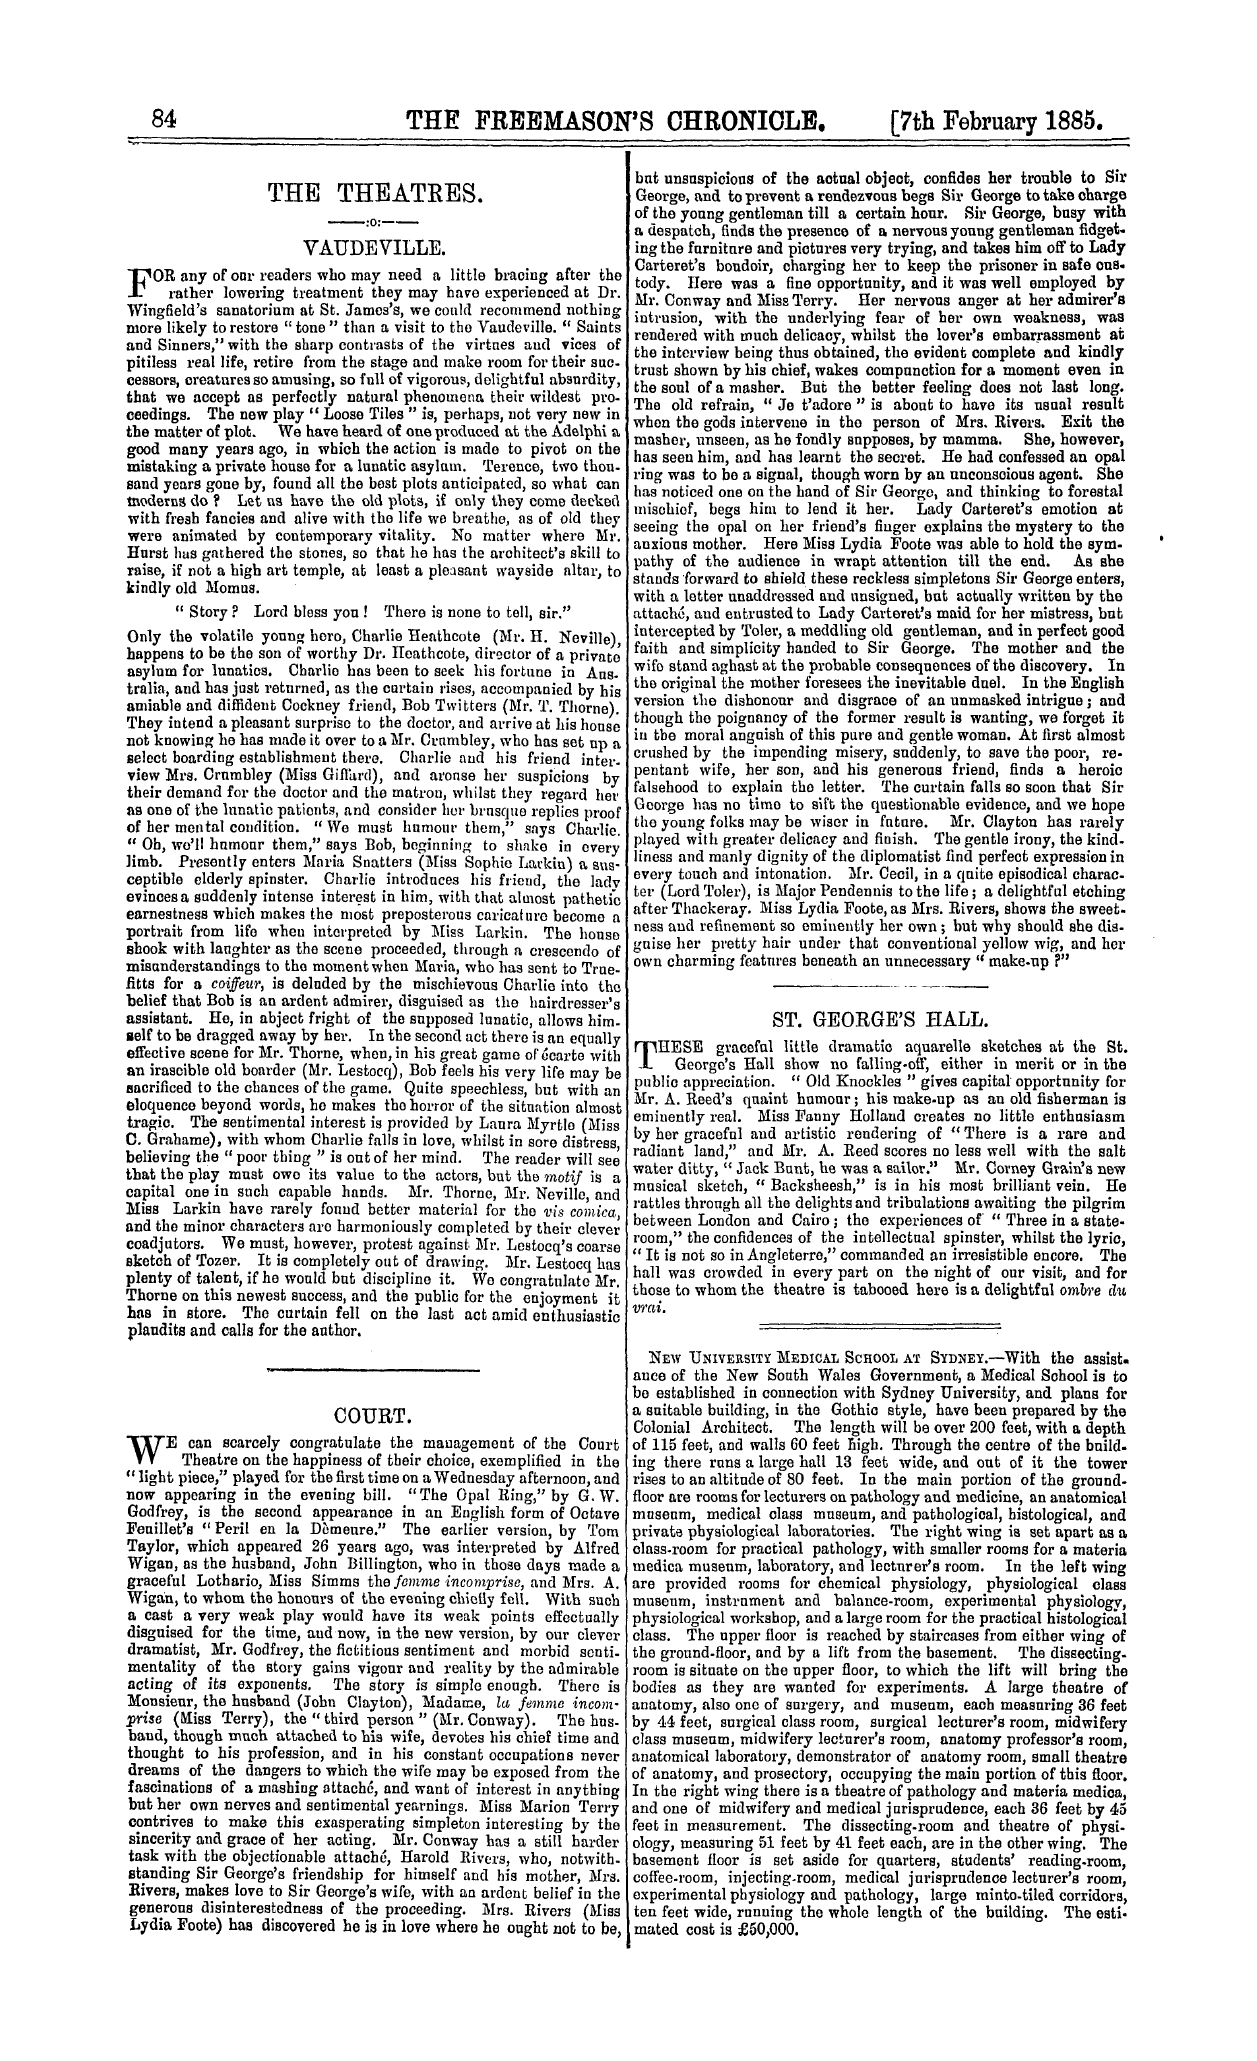 The Freemason's Chronicle: 1885-02-07 - Court.